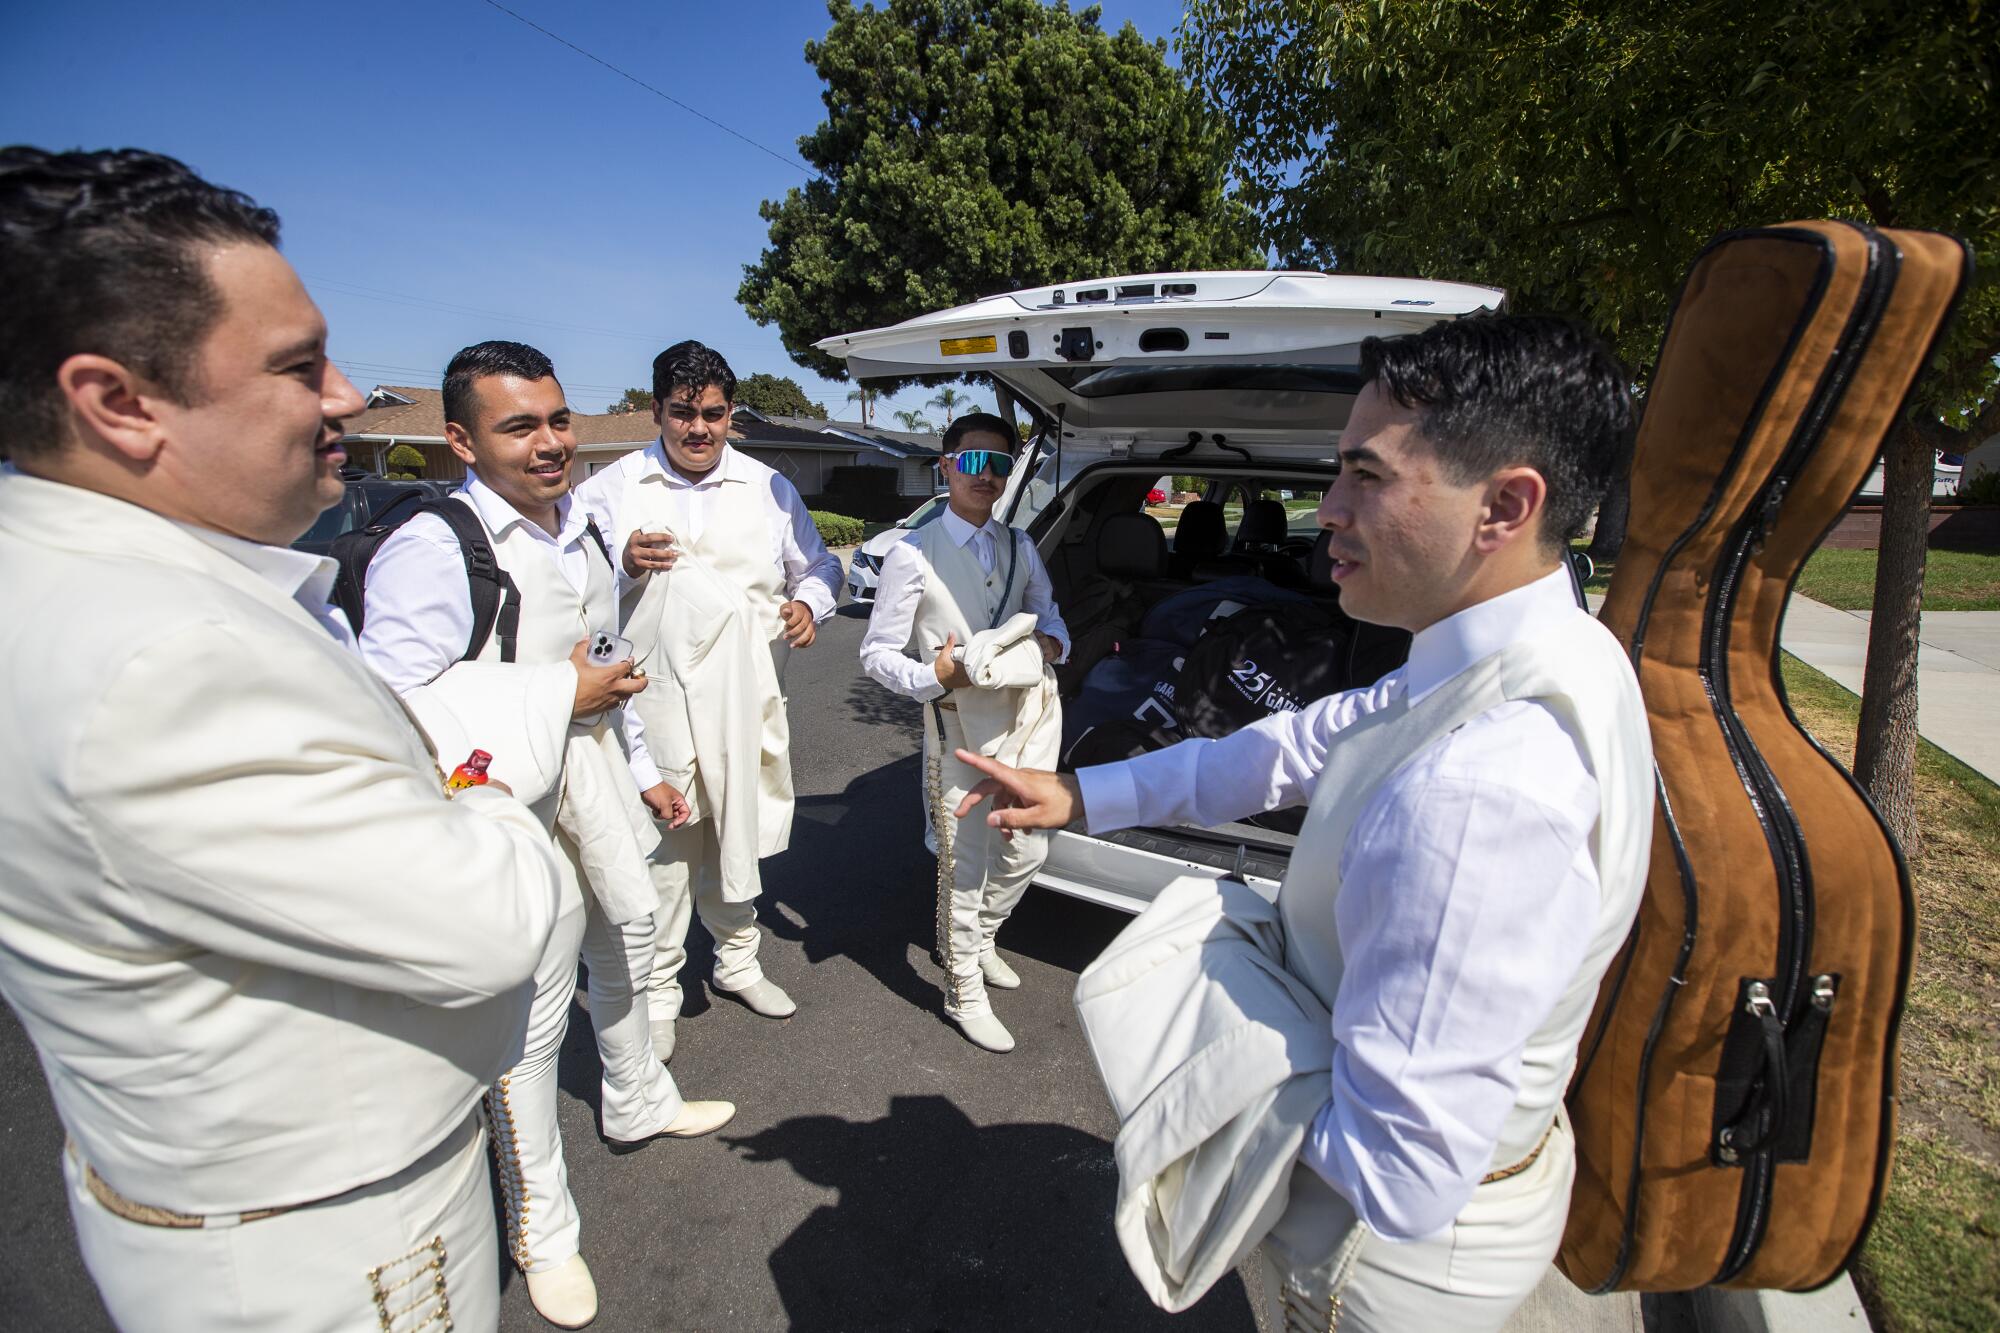 Mariachi Garibaldi de Jaime Cuellar members load up in the van as they carpool to Dodger Stadium